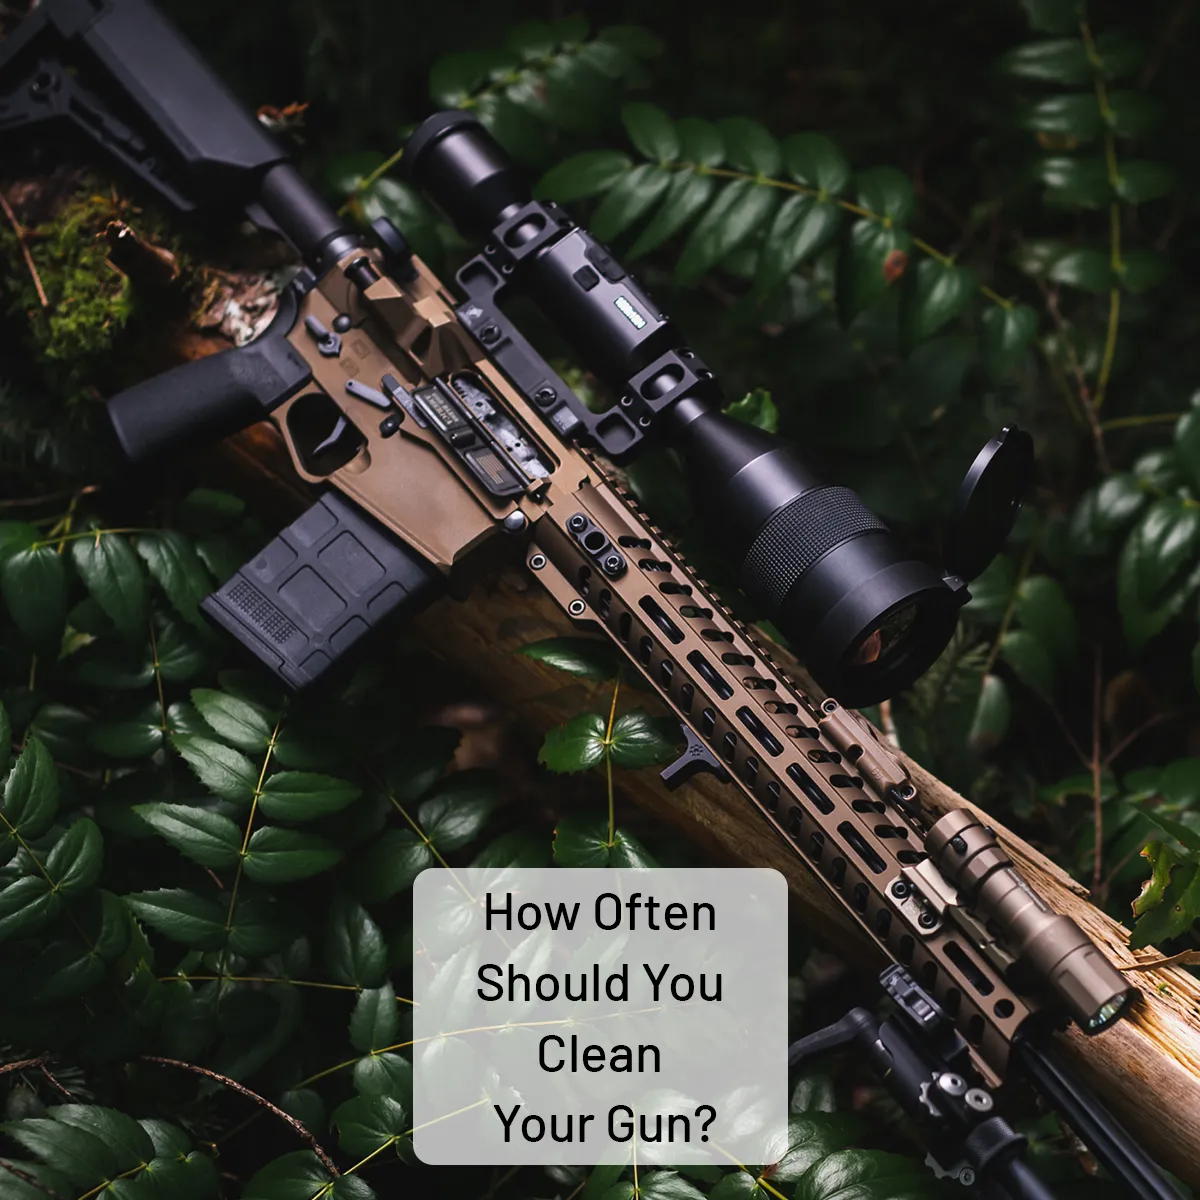 How often should you clean your gun